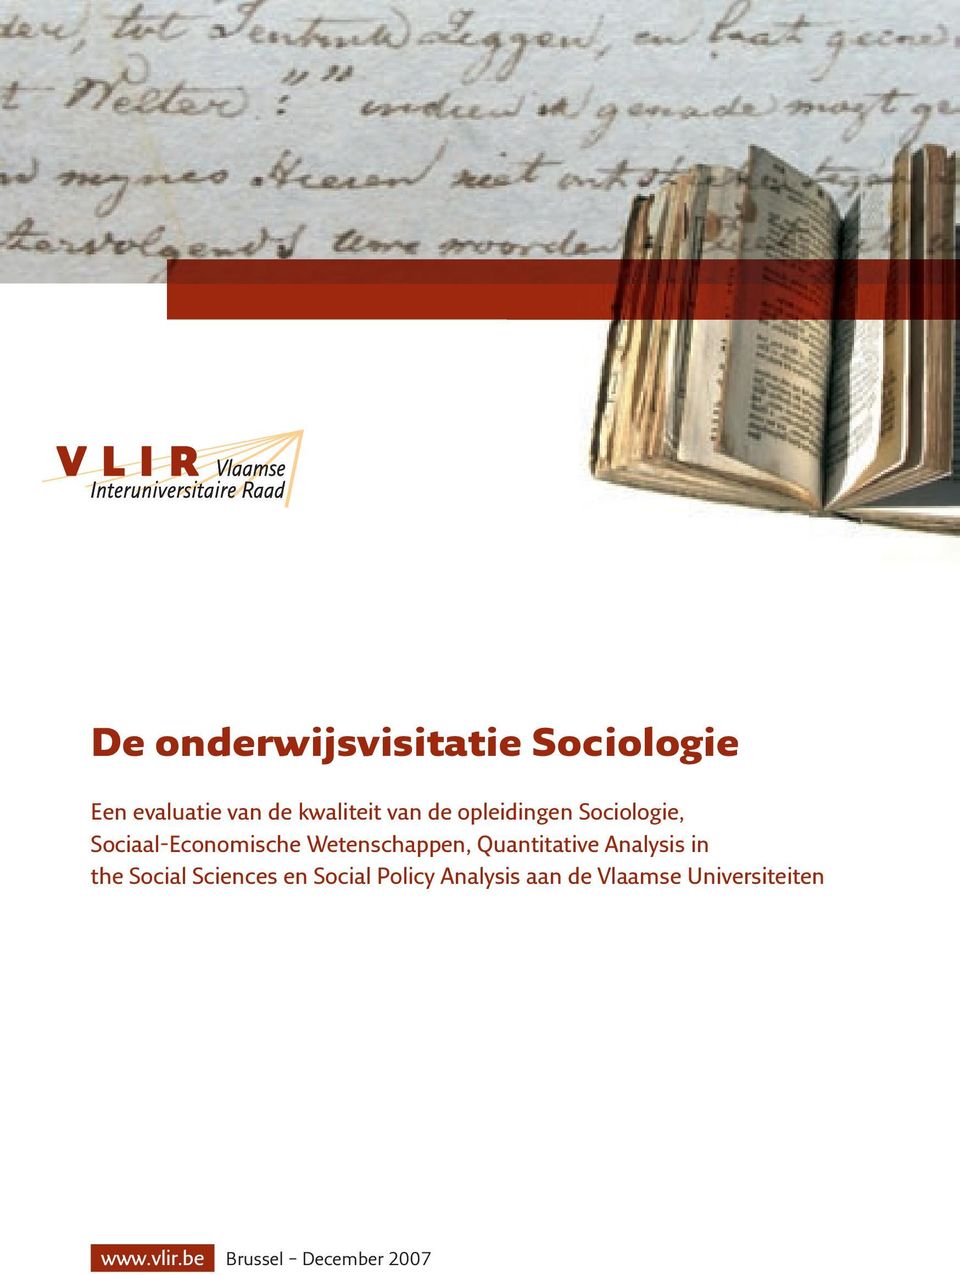 Quantitative Analysis in the Social Sciences en Social Policy